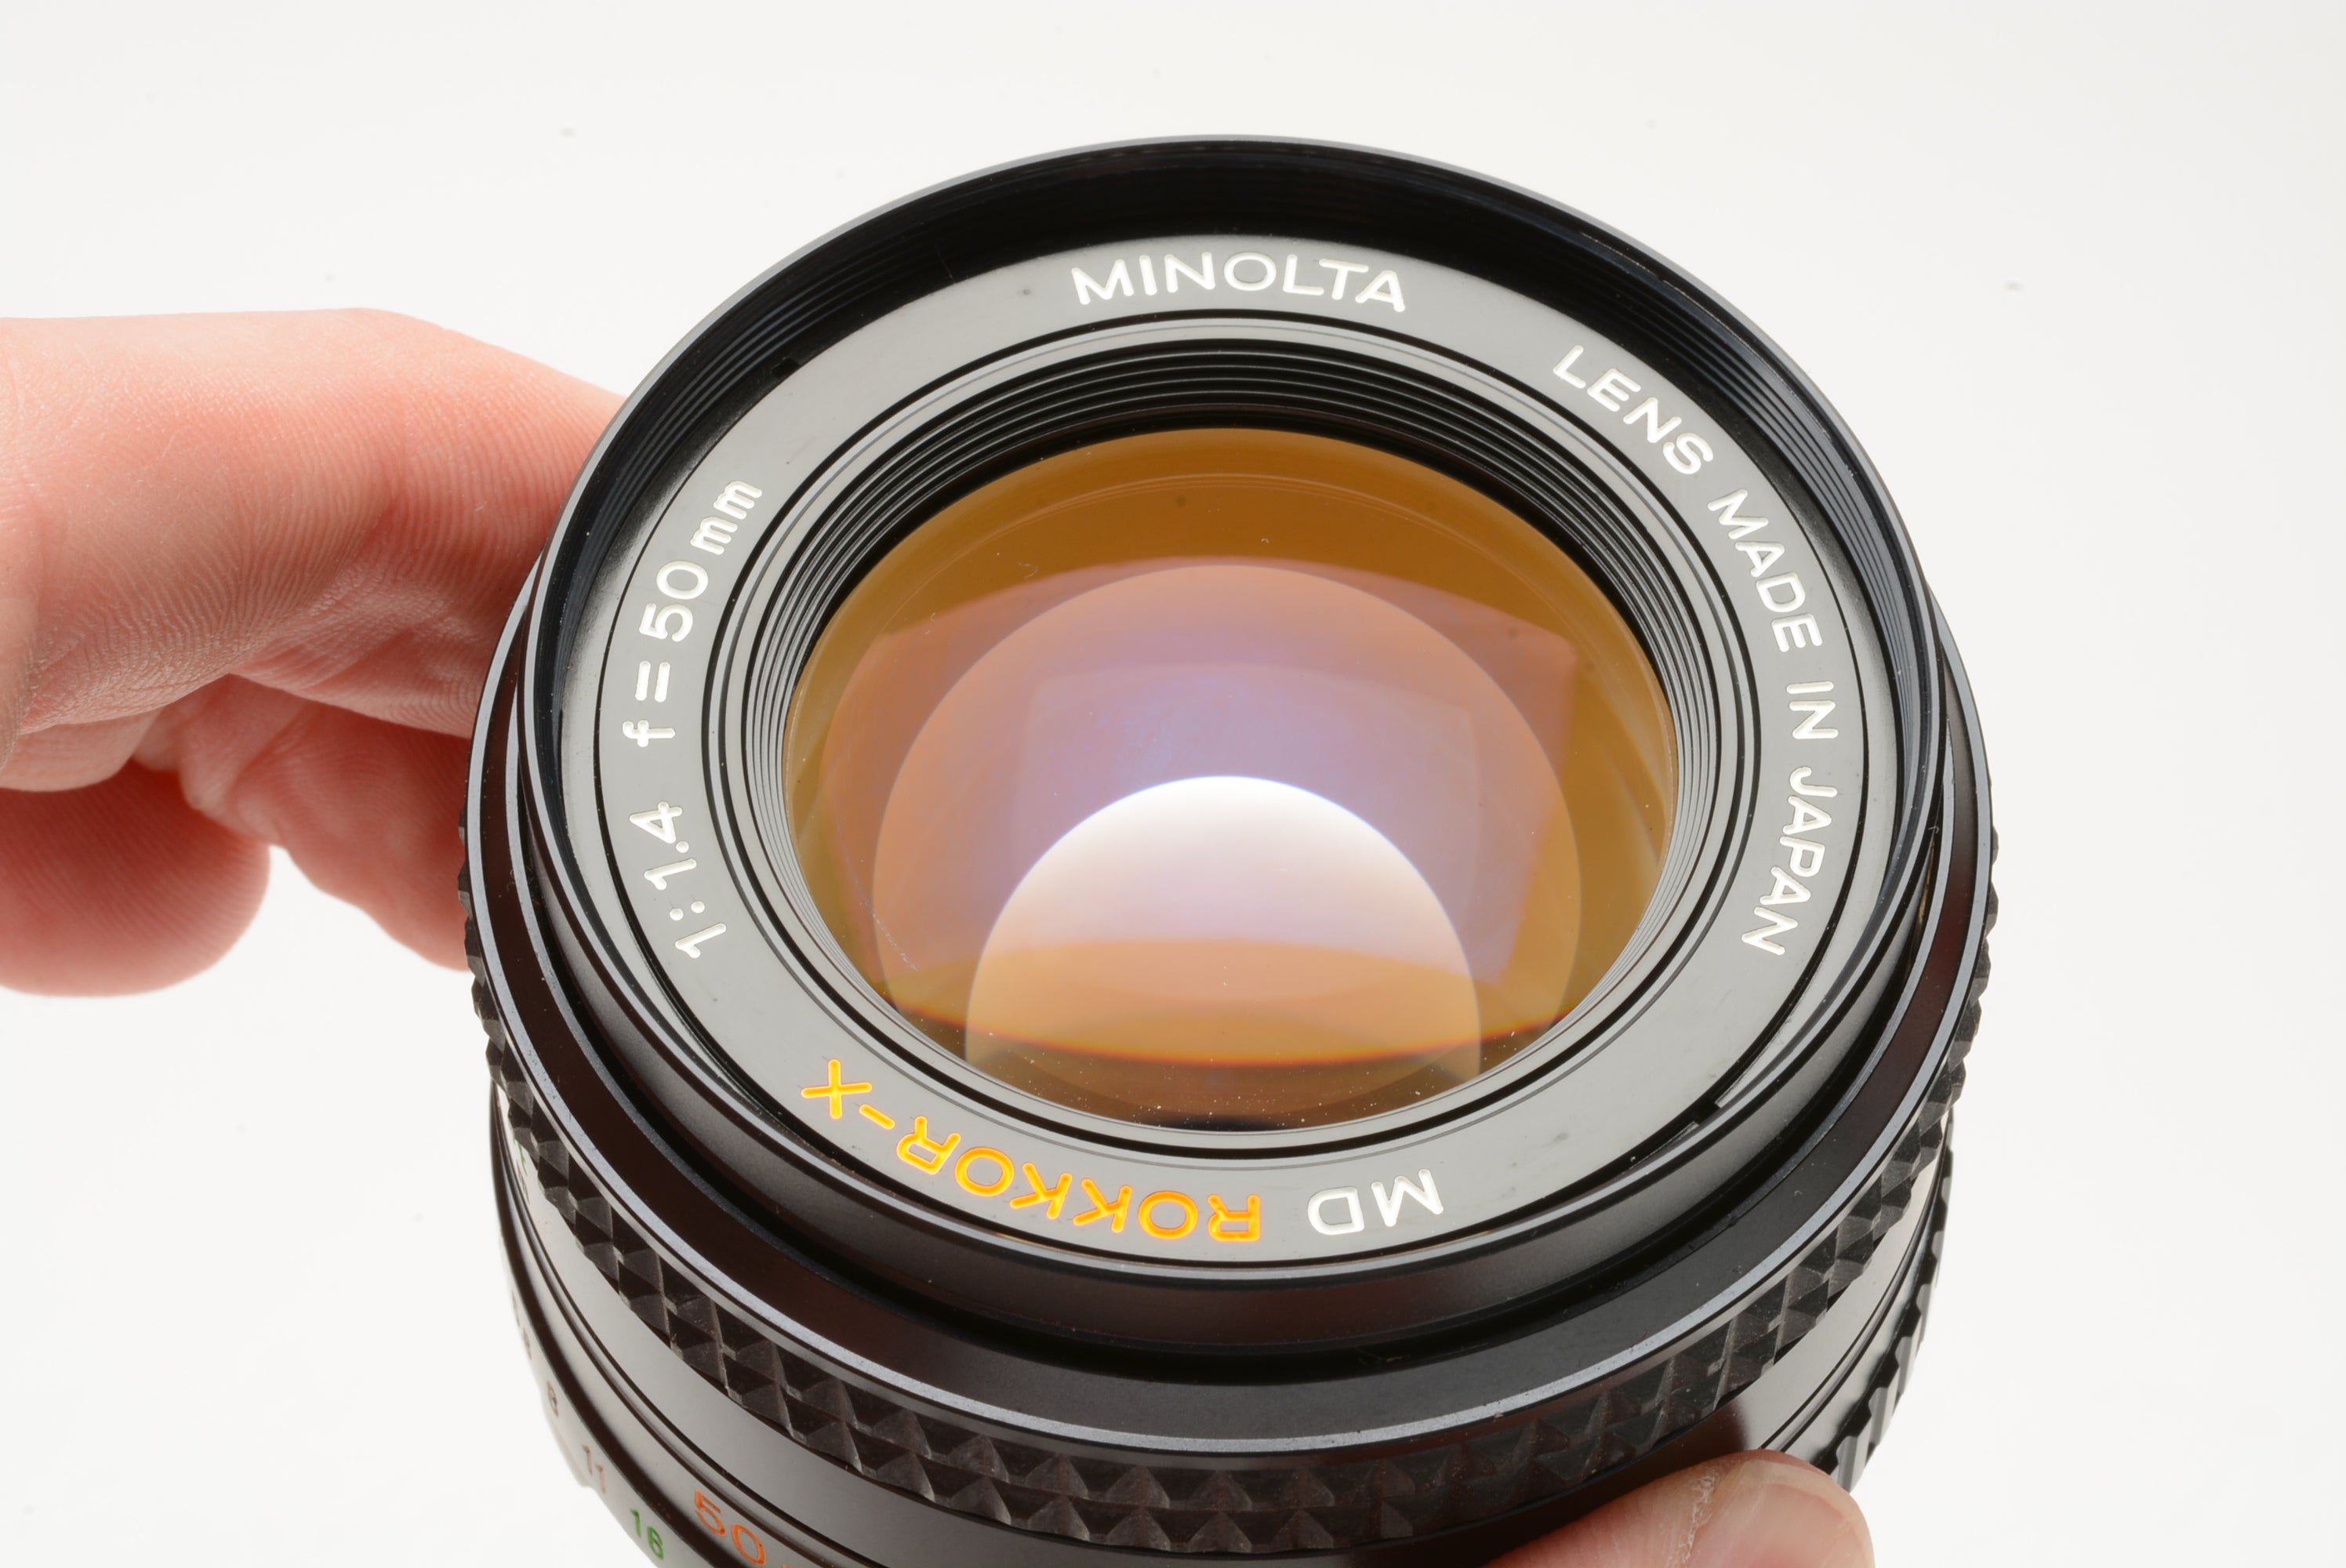 Minolta MD Rokkor-X 50mm f1.4 prime lens, caps, very clean & sharp!